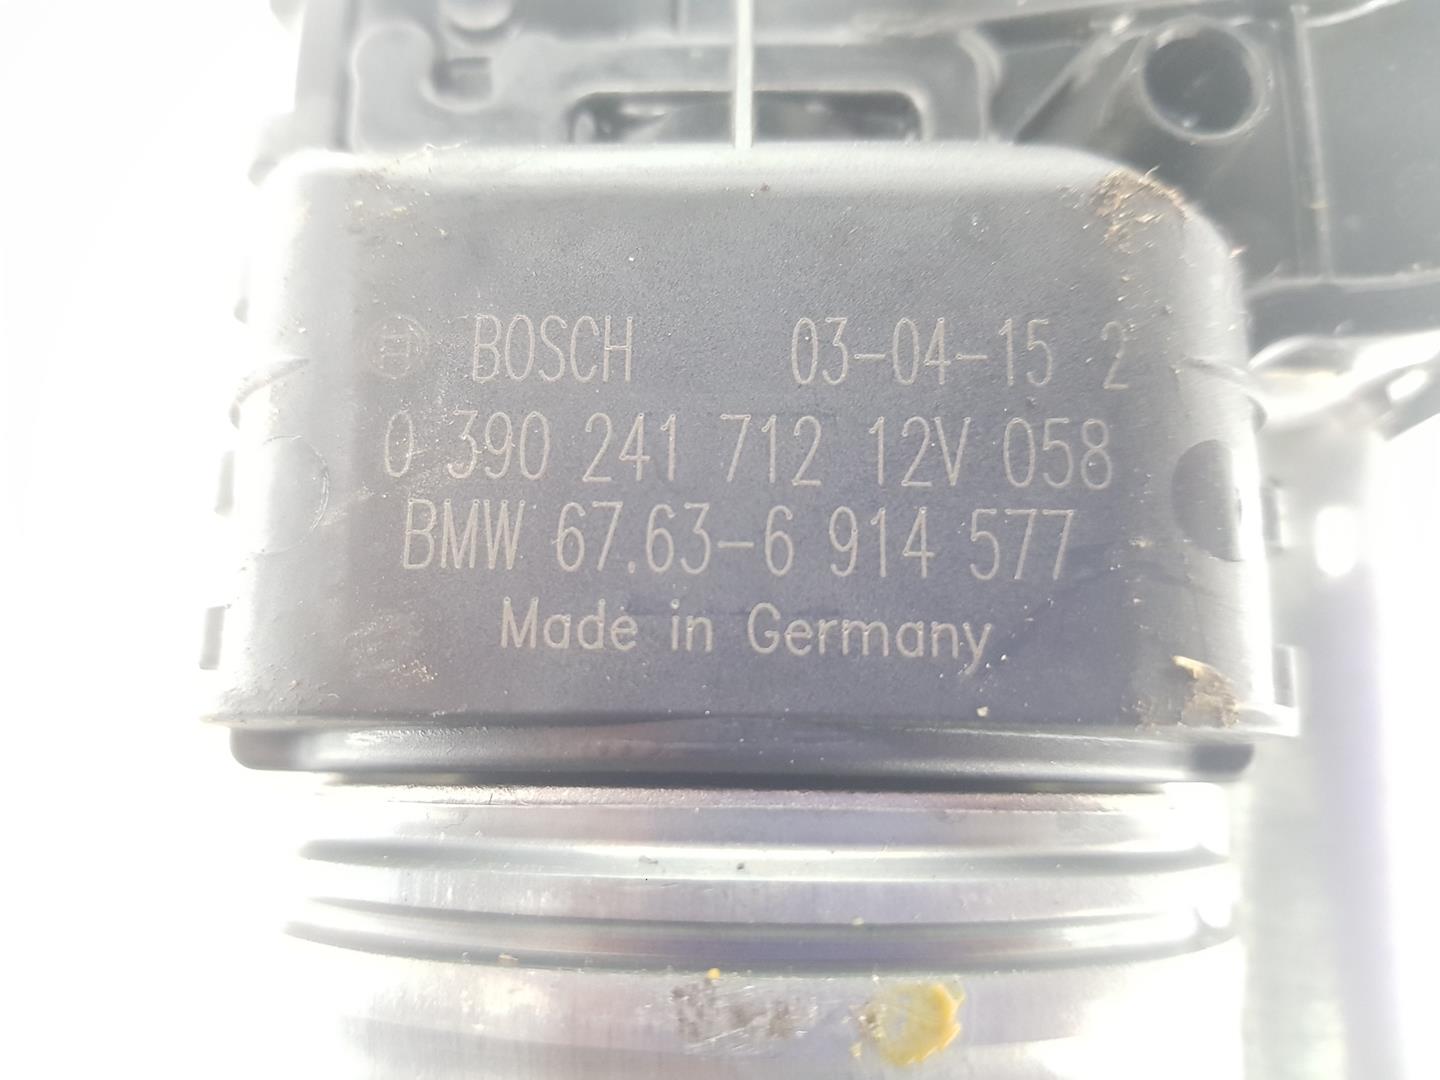 BMW 3 Series E46 (1997-2006) Front Windshield Wiper Mechanism 61617071693, 67636914577 19809592